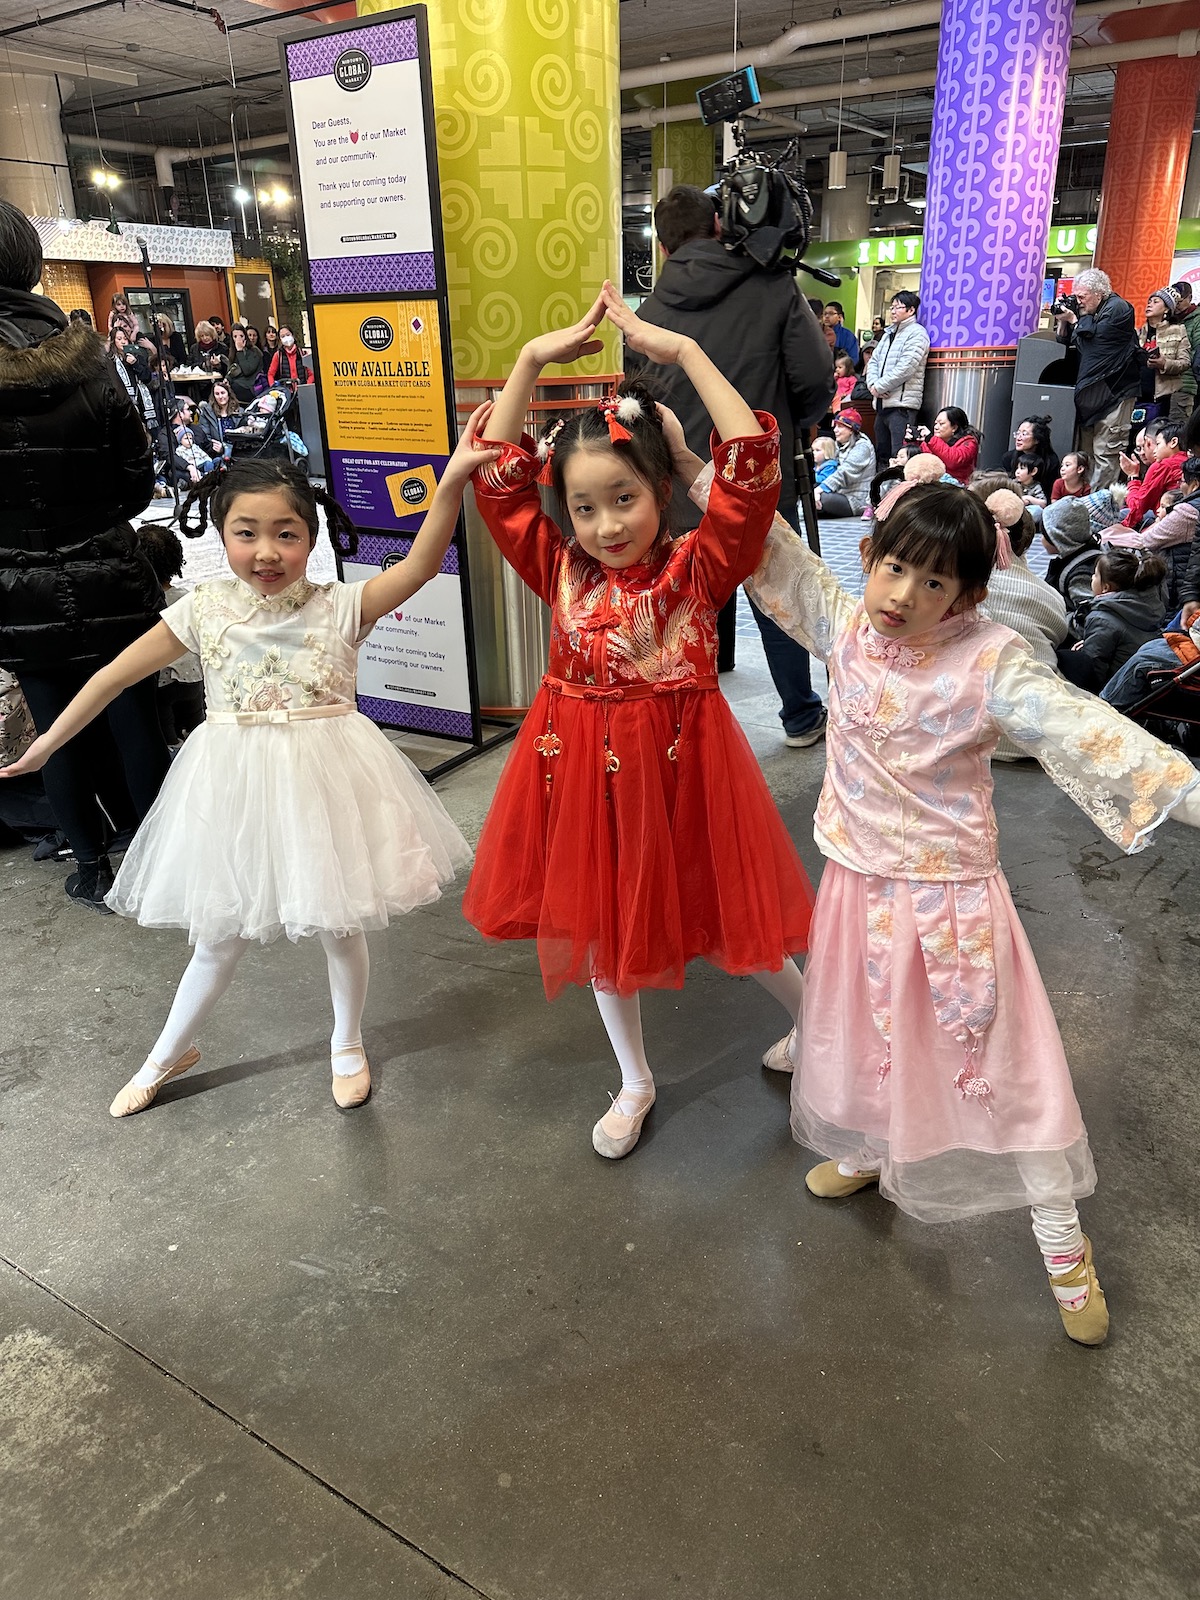 3 girl dancers posing for Lunar New Year. 